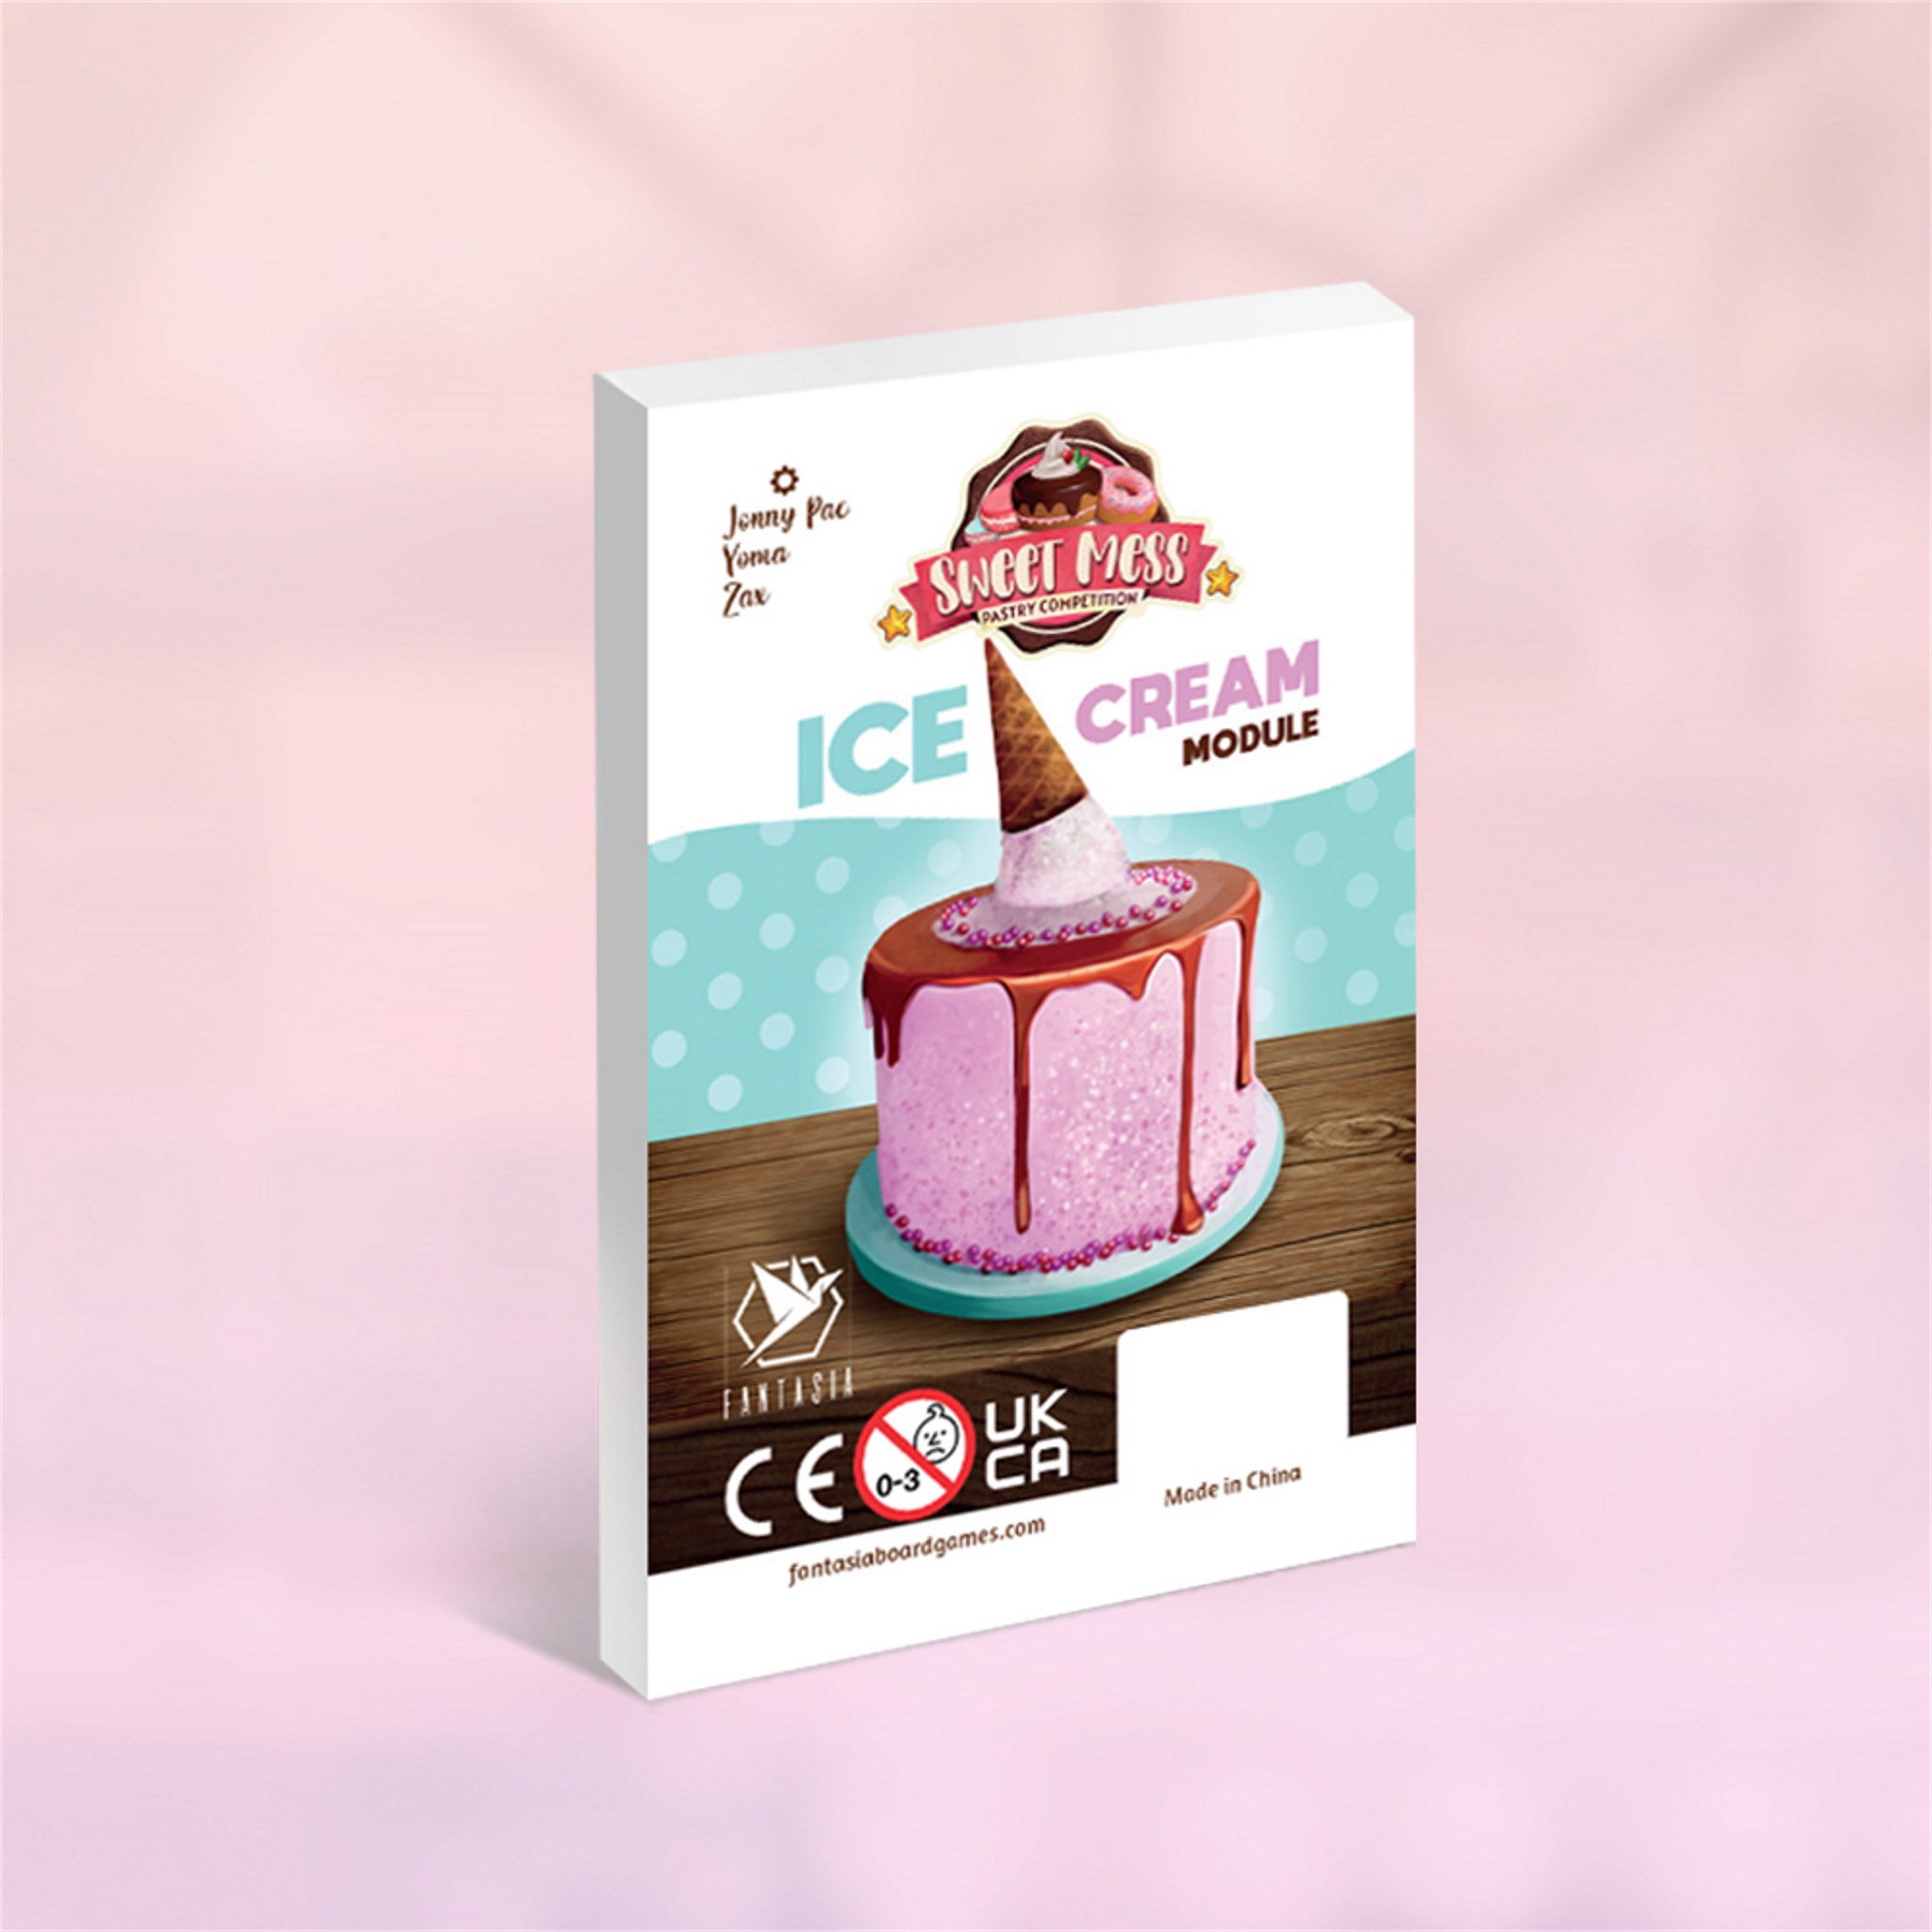 TLAMA games Sladká tečka: Klání cukrářů - Ice Cream Module (Sweet Mess - Ice Cream Module)